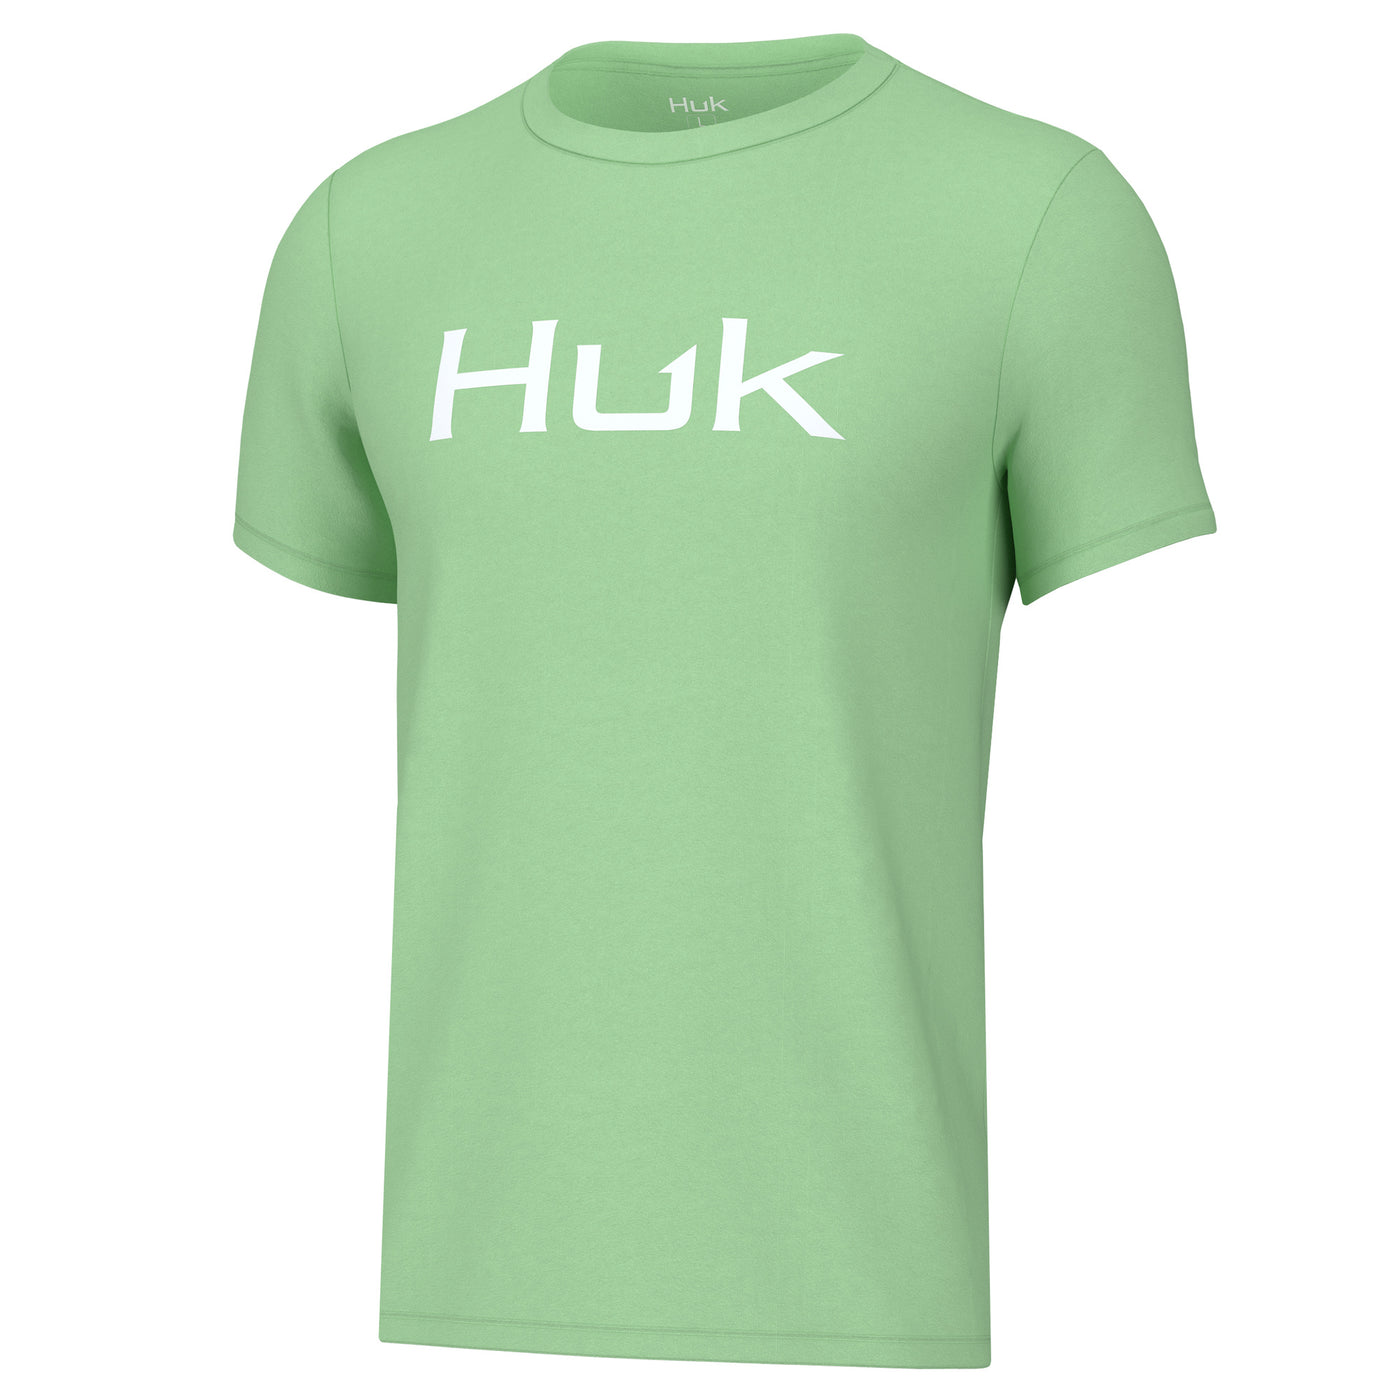 Huk Youth Pursuit Logo Tee